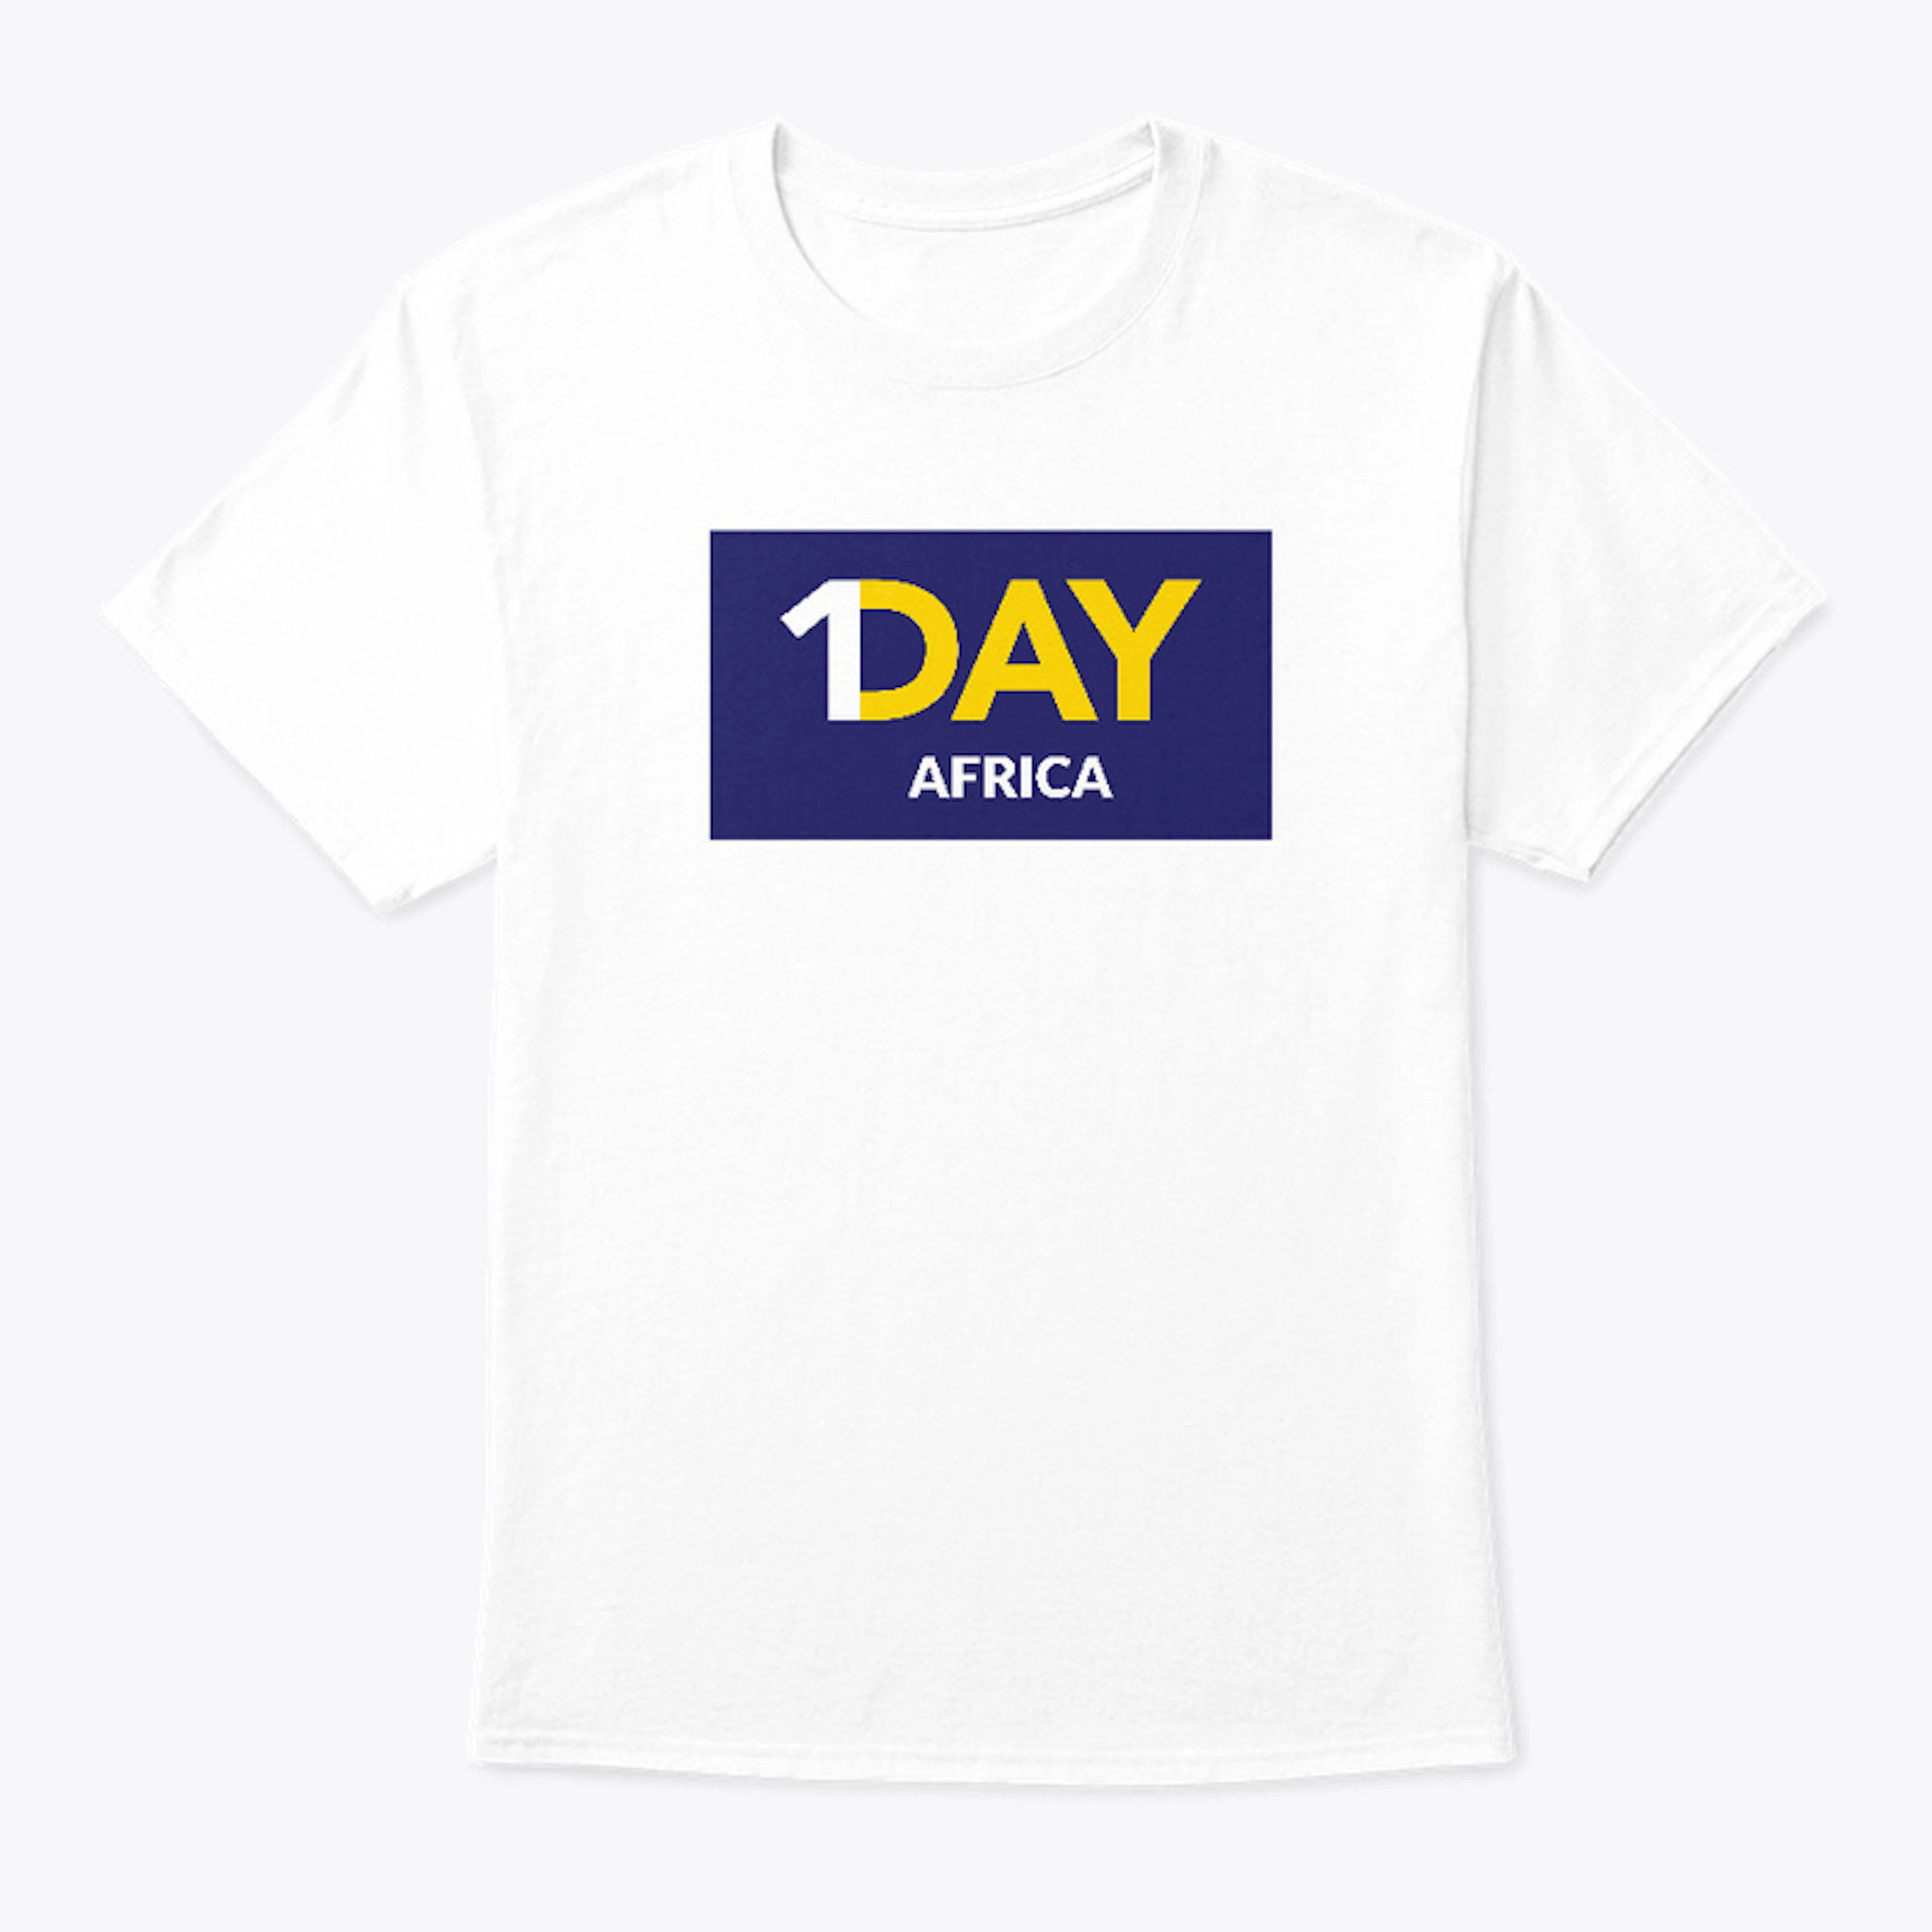 1Day Africa T-Shirt